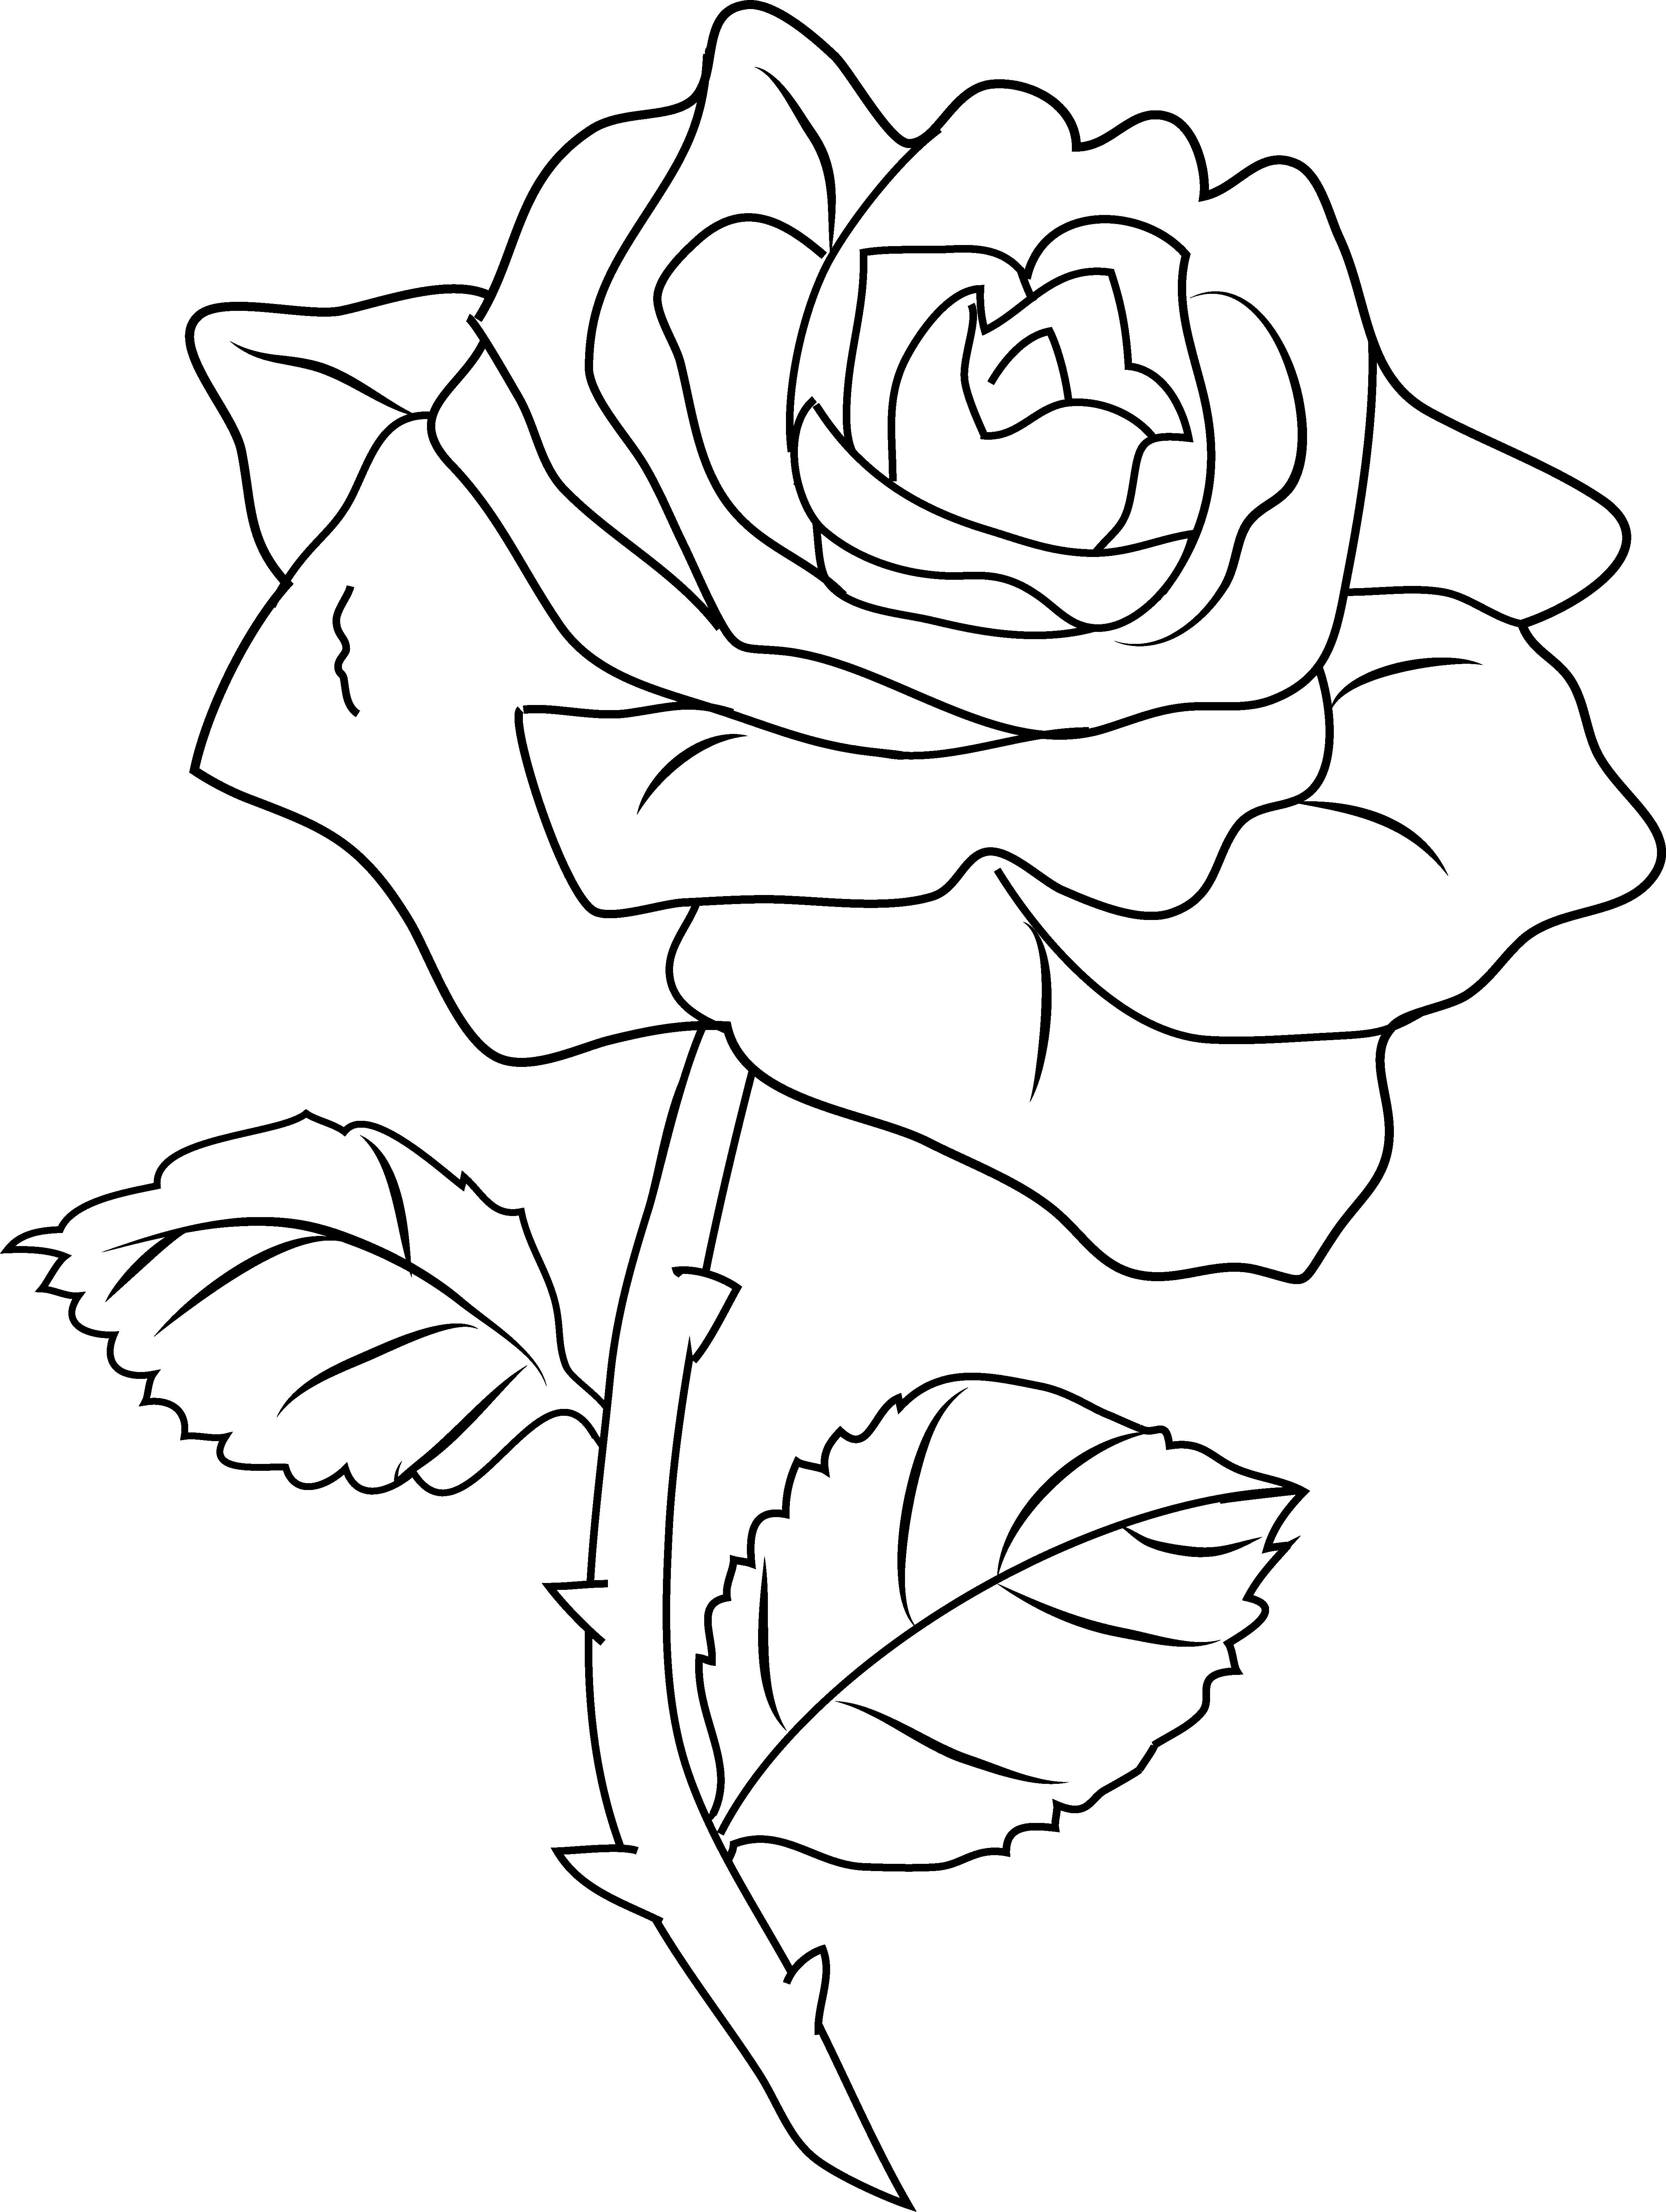 Pretty Rose Coloring Page - Free Clip Art